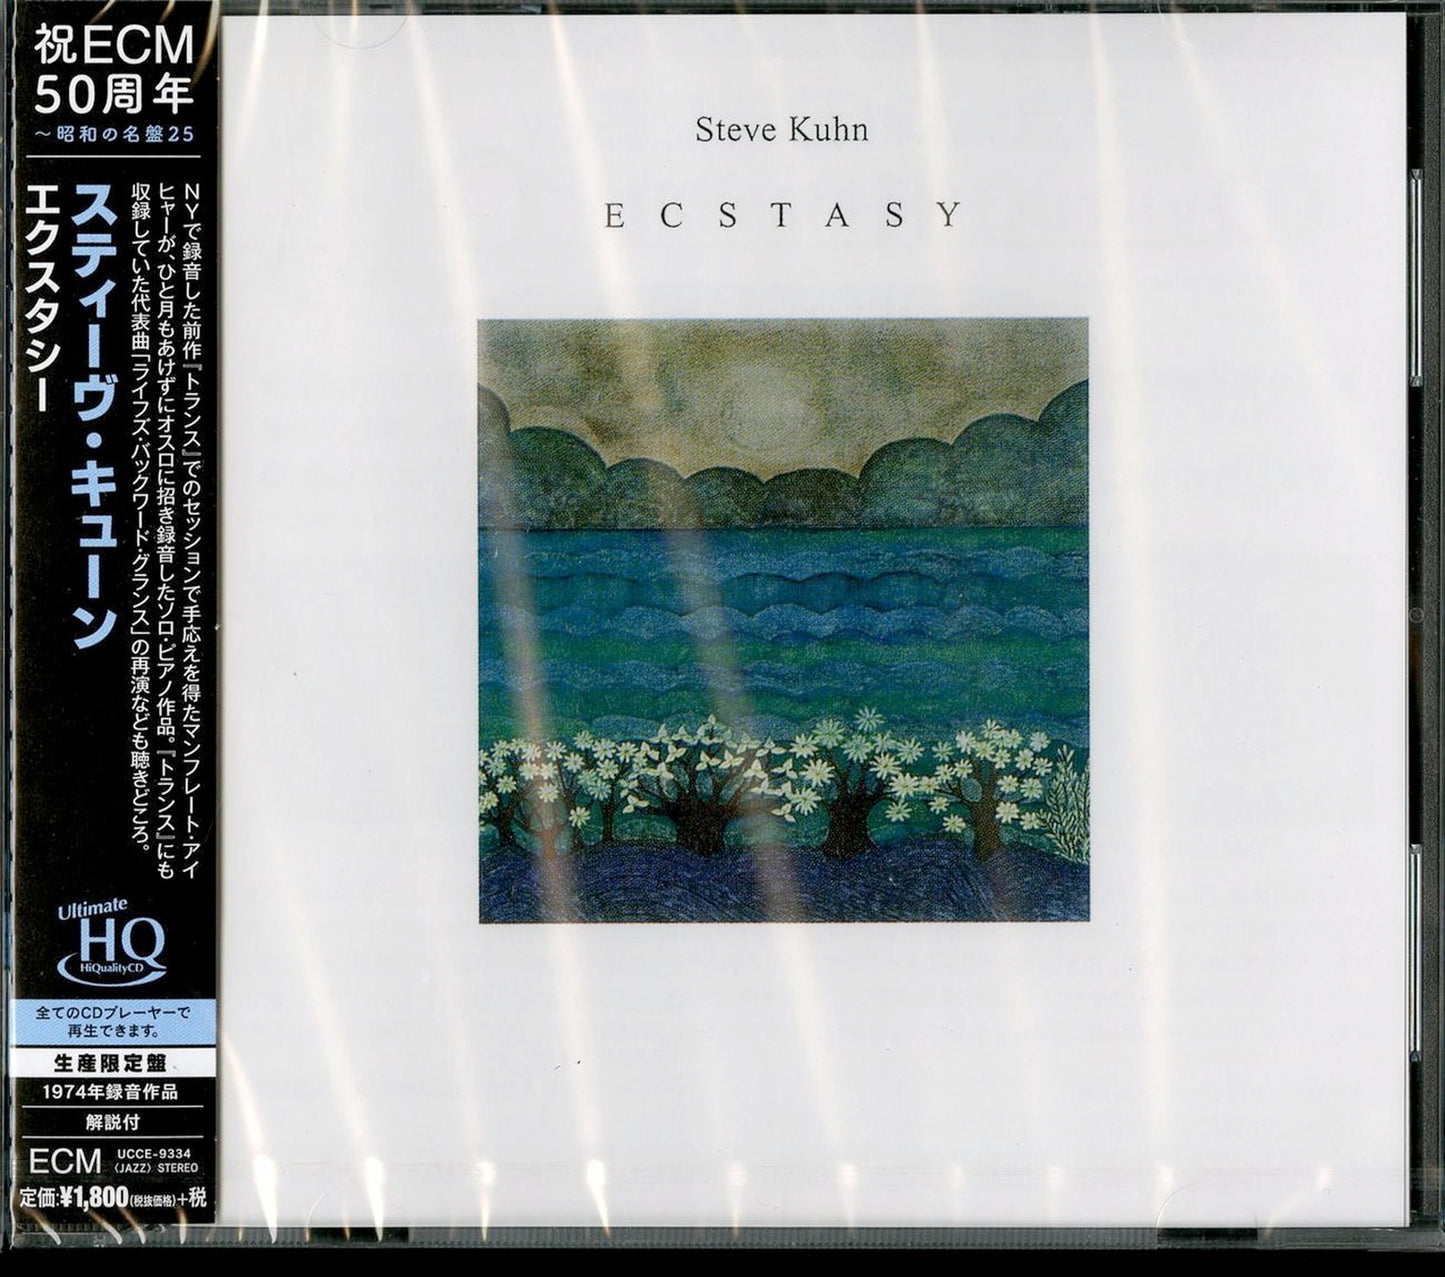 Steve Kuhn - Ecstasy - UHQCD Limited Edition